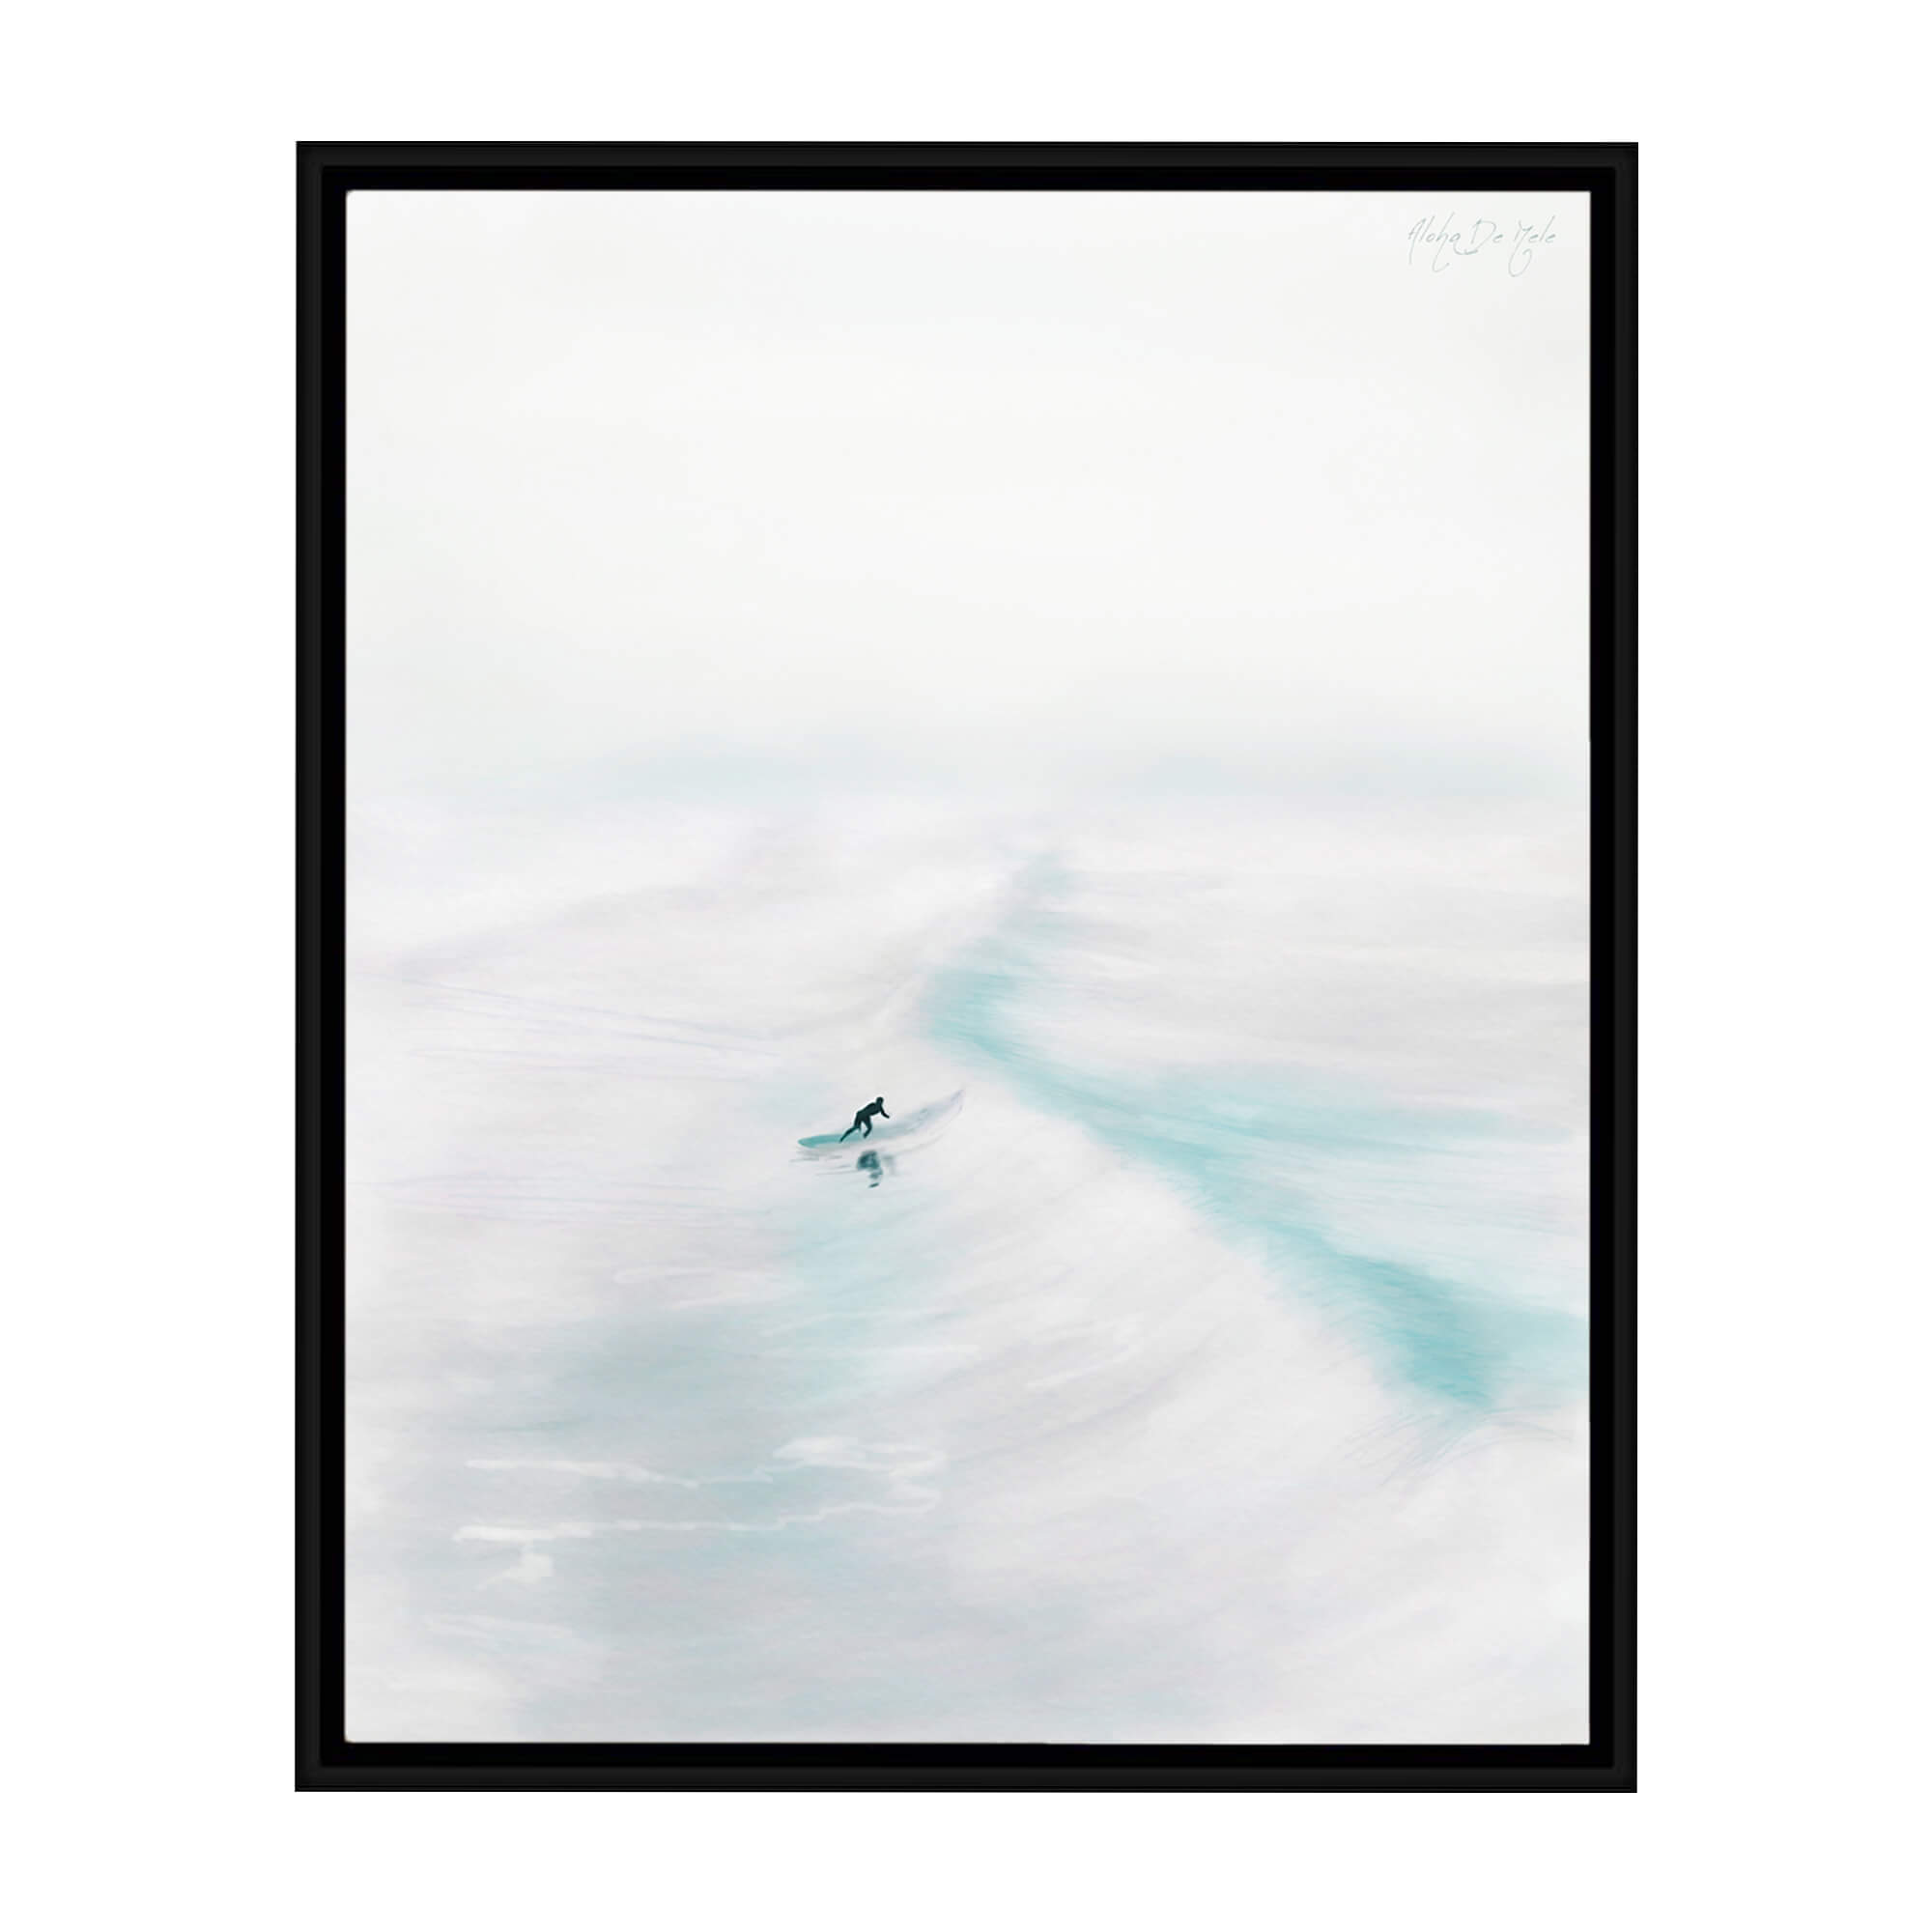 A framed canvas giclée art print of a surfer riding the epic waves of Hawaii by Hawaii artist Aloha De Mele